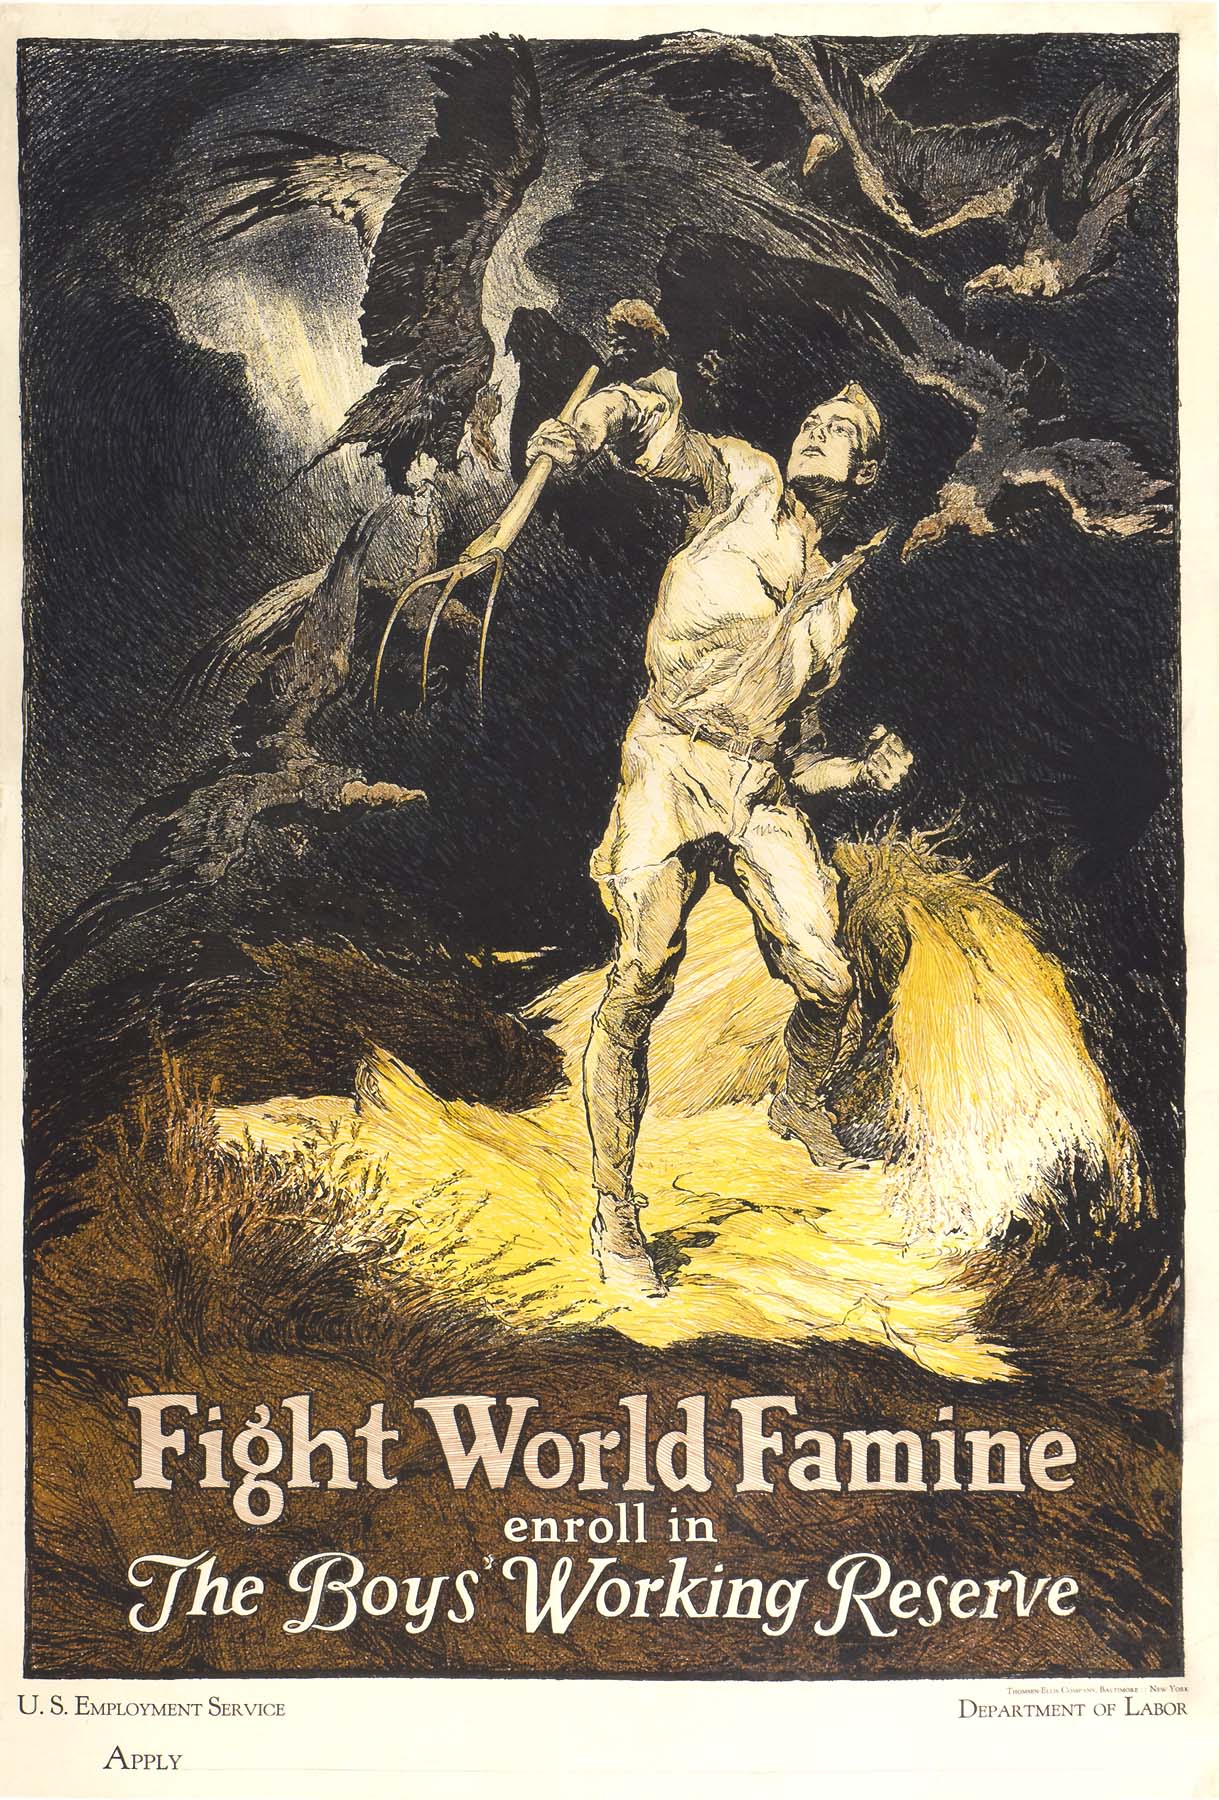 Fight World Famine